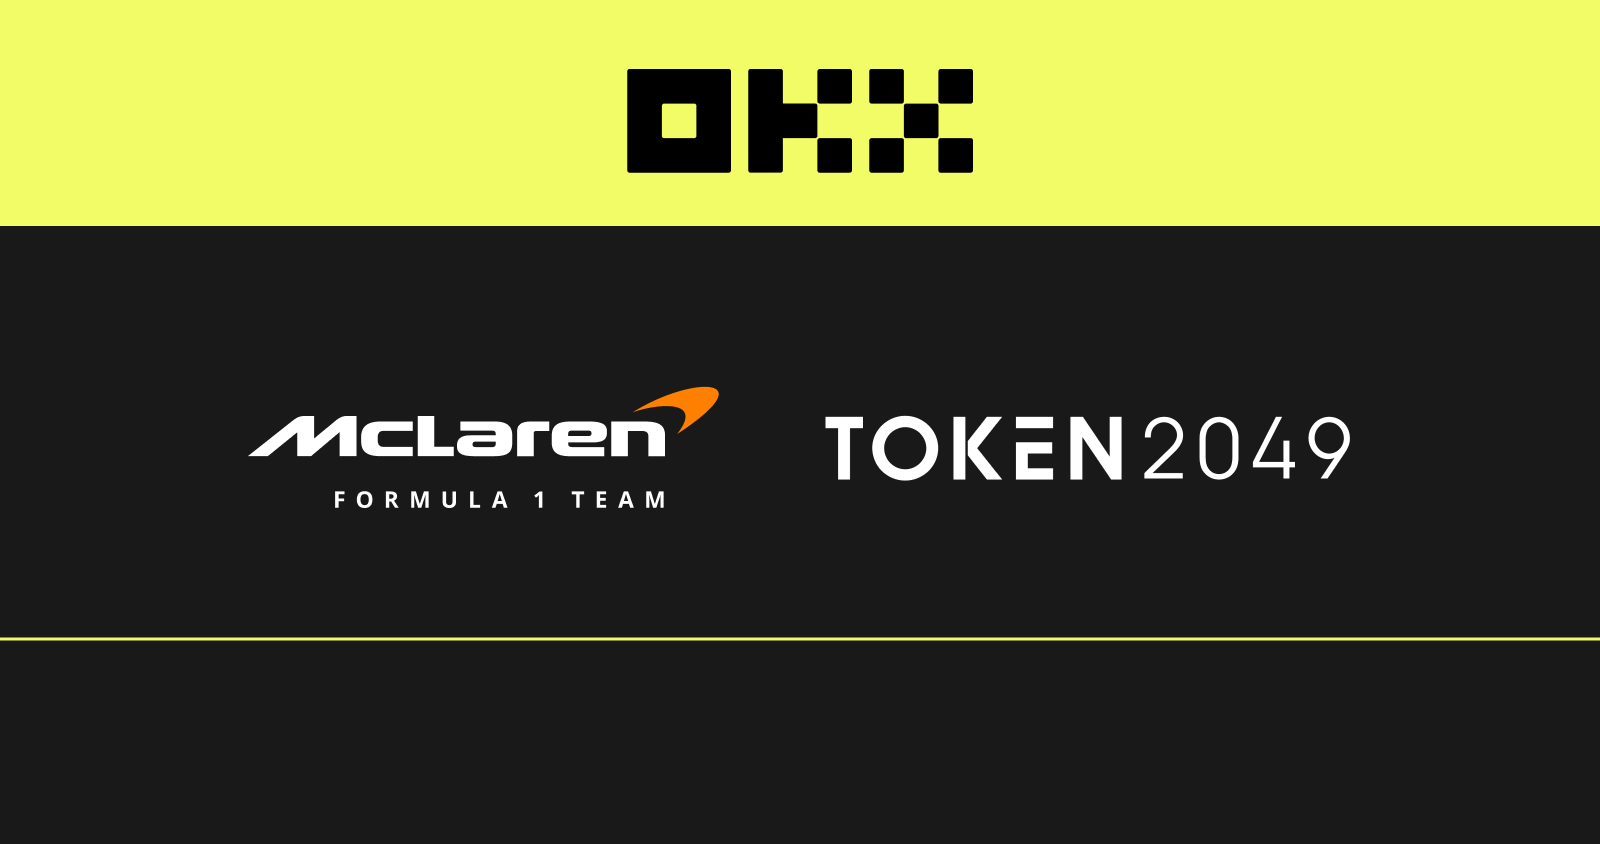 Find OKX at TOKEN2049 as title sponsor